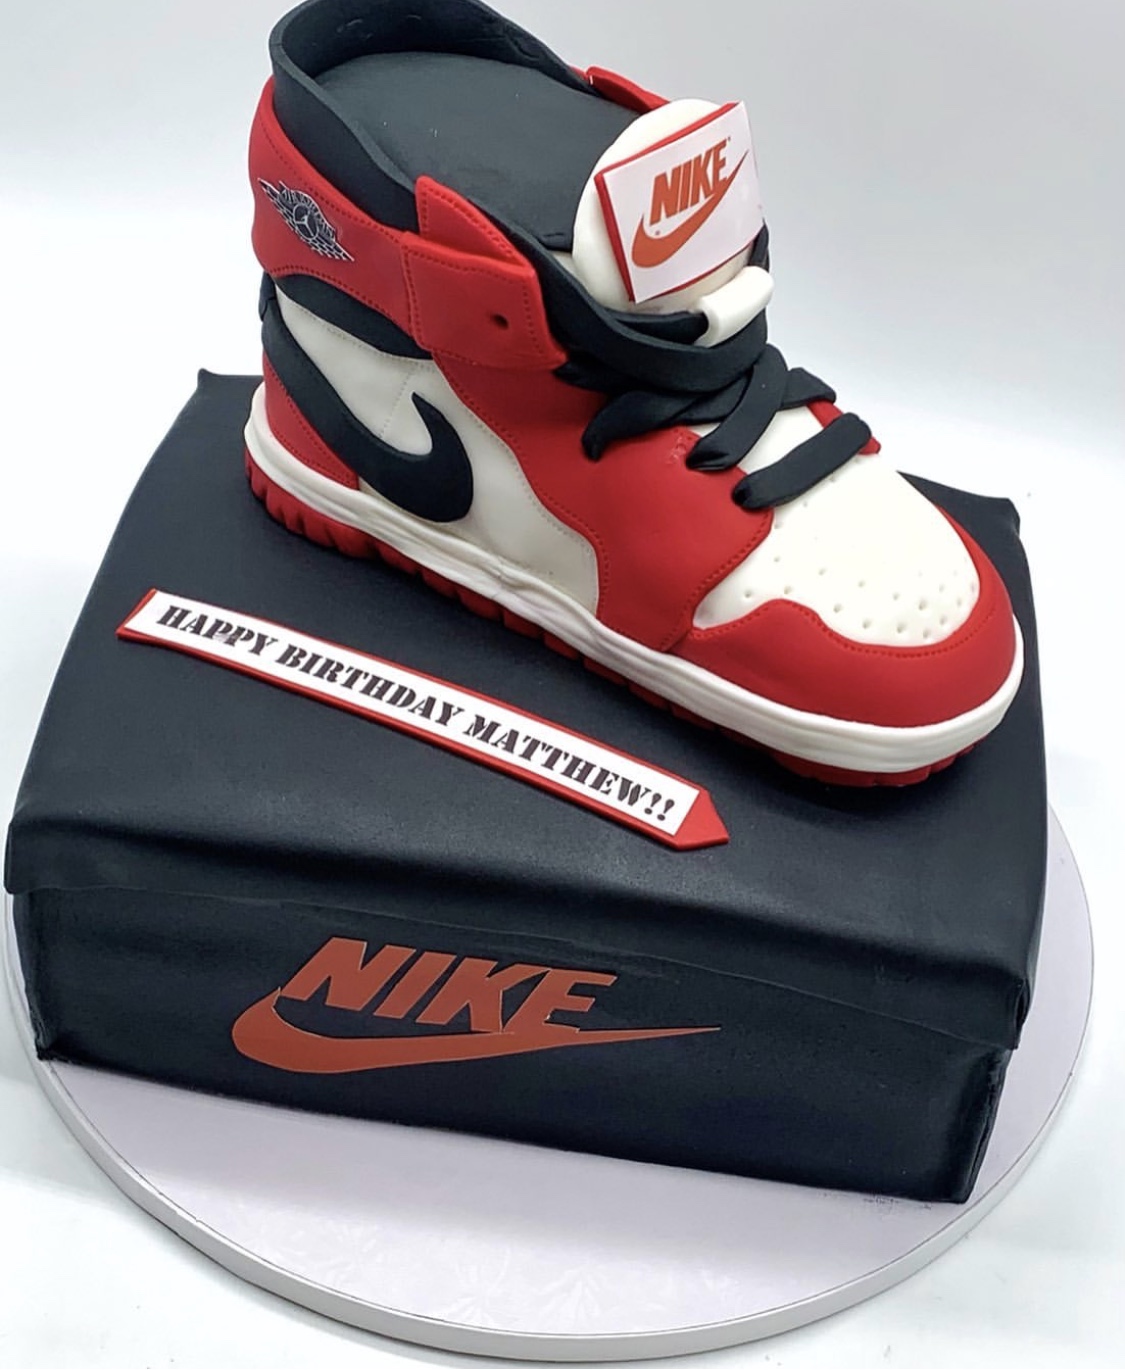 Jordan Shoe Cake Free Delivery Worldwide - Slaylebrity